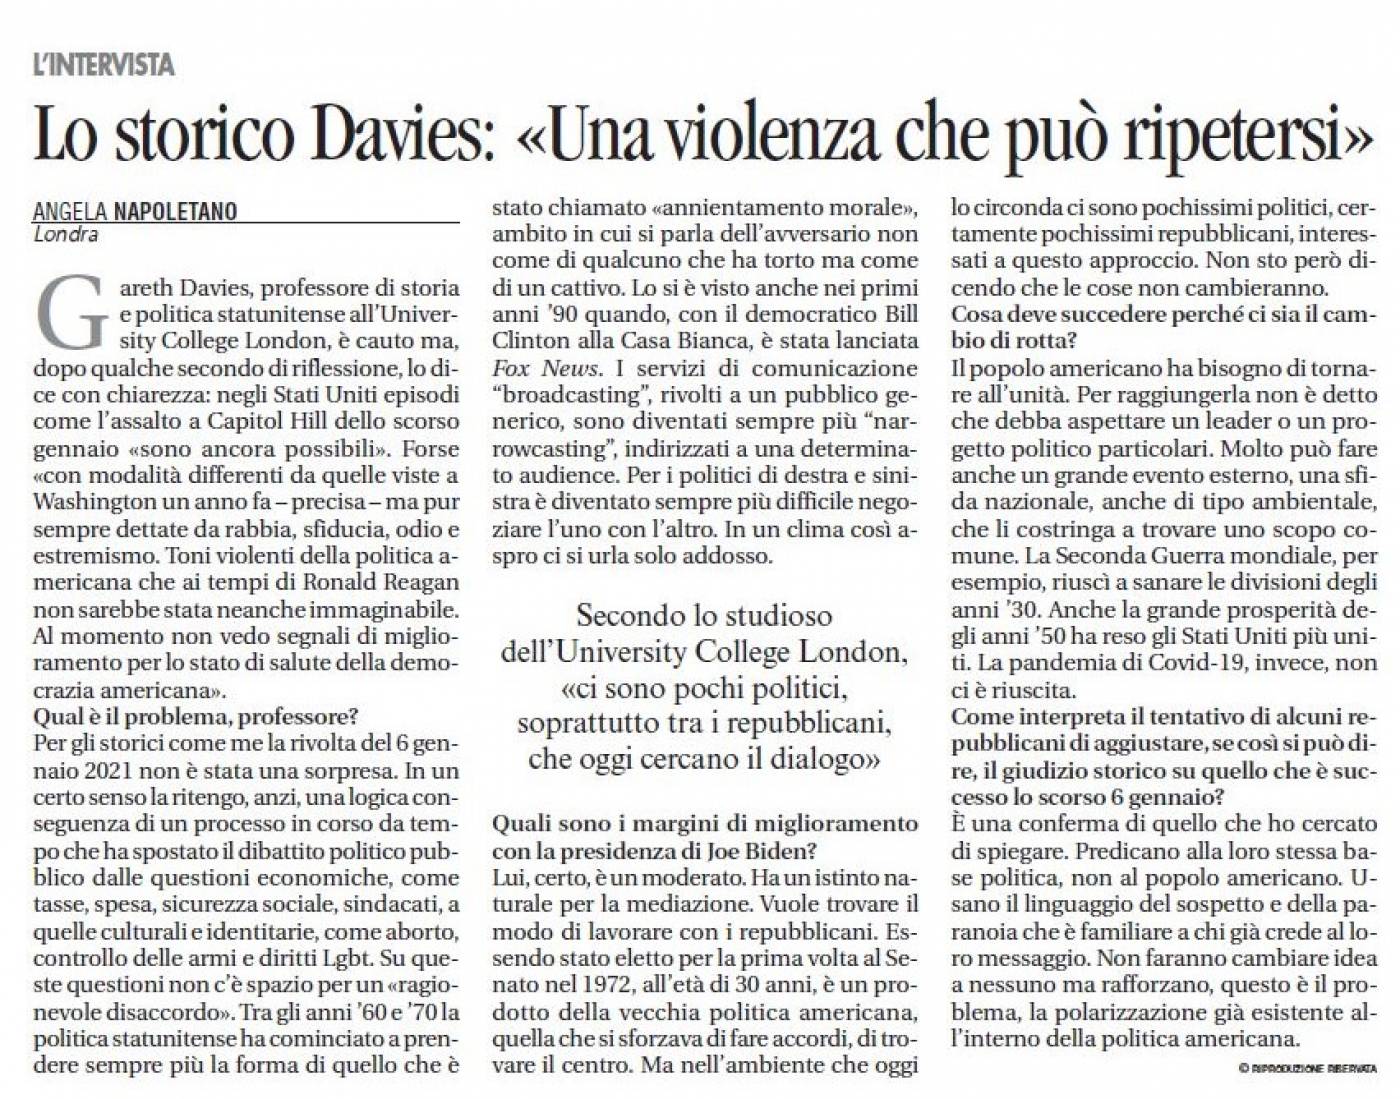 Article in Italian by Professor Gareth Davies in newspaper Avvenire